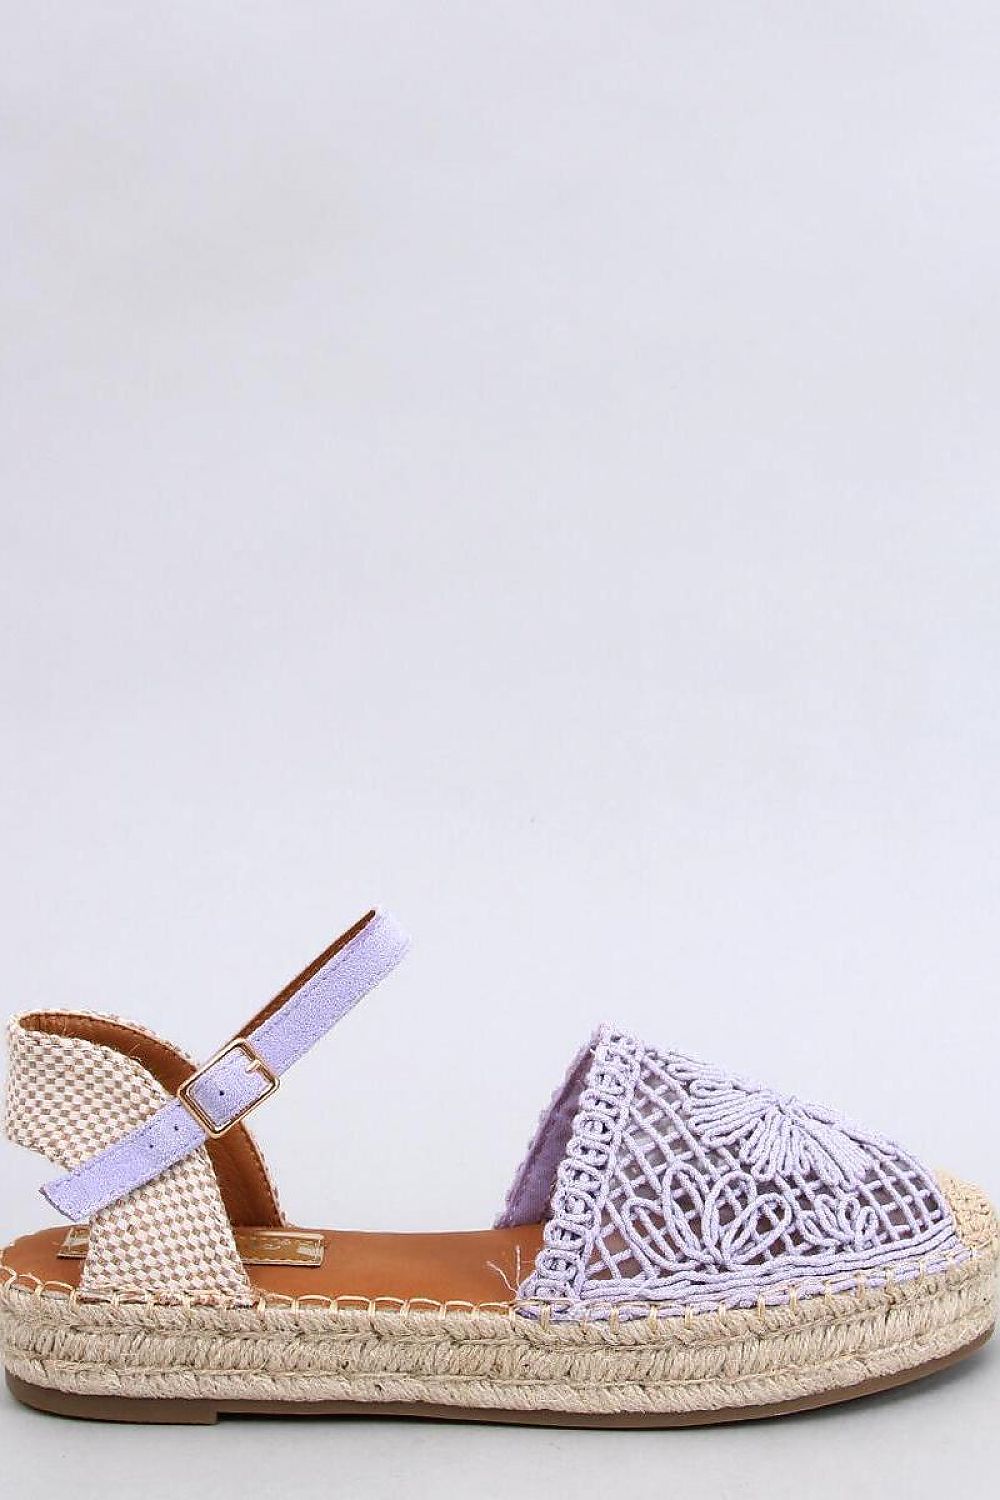 TEEK - Violet Bloom Knit Espadrilles Sandals SHOES TEEK MH 6.5  